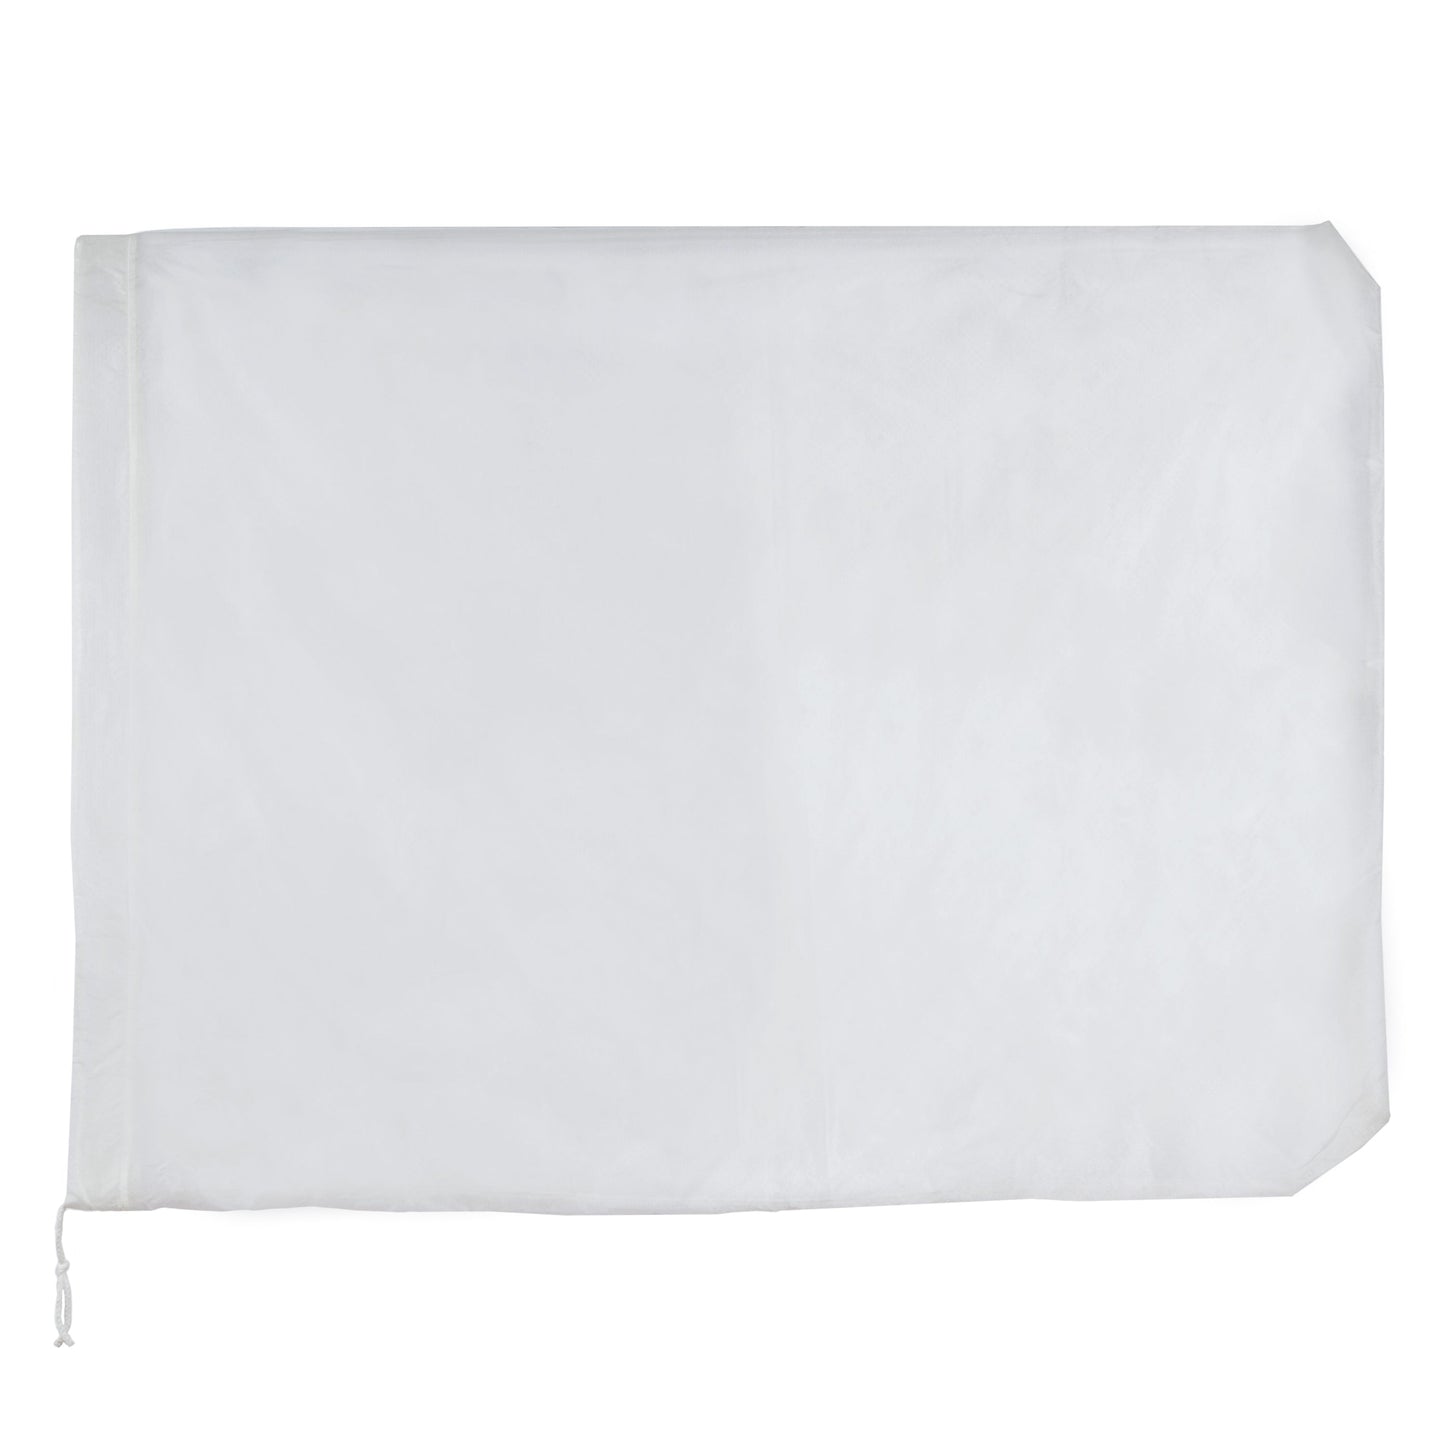 American Dawn | 30X40 Inch Economy White Laundry Bag With Drawstring Closure 